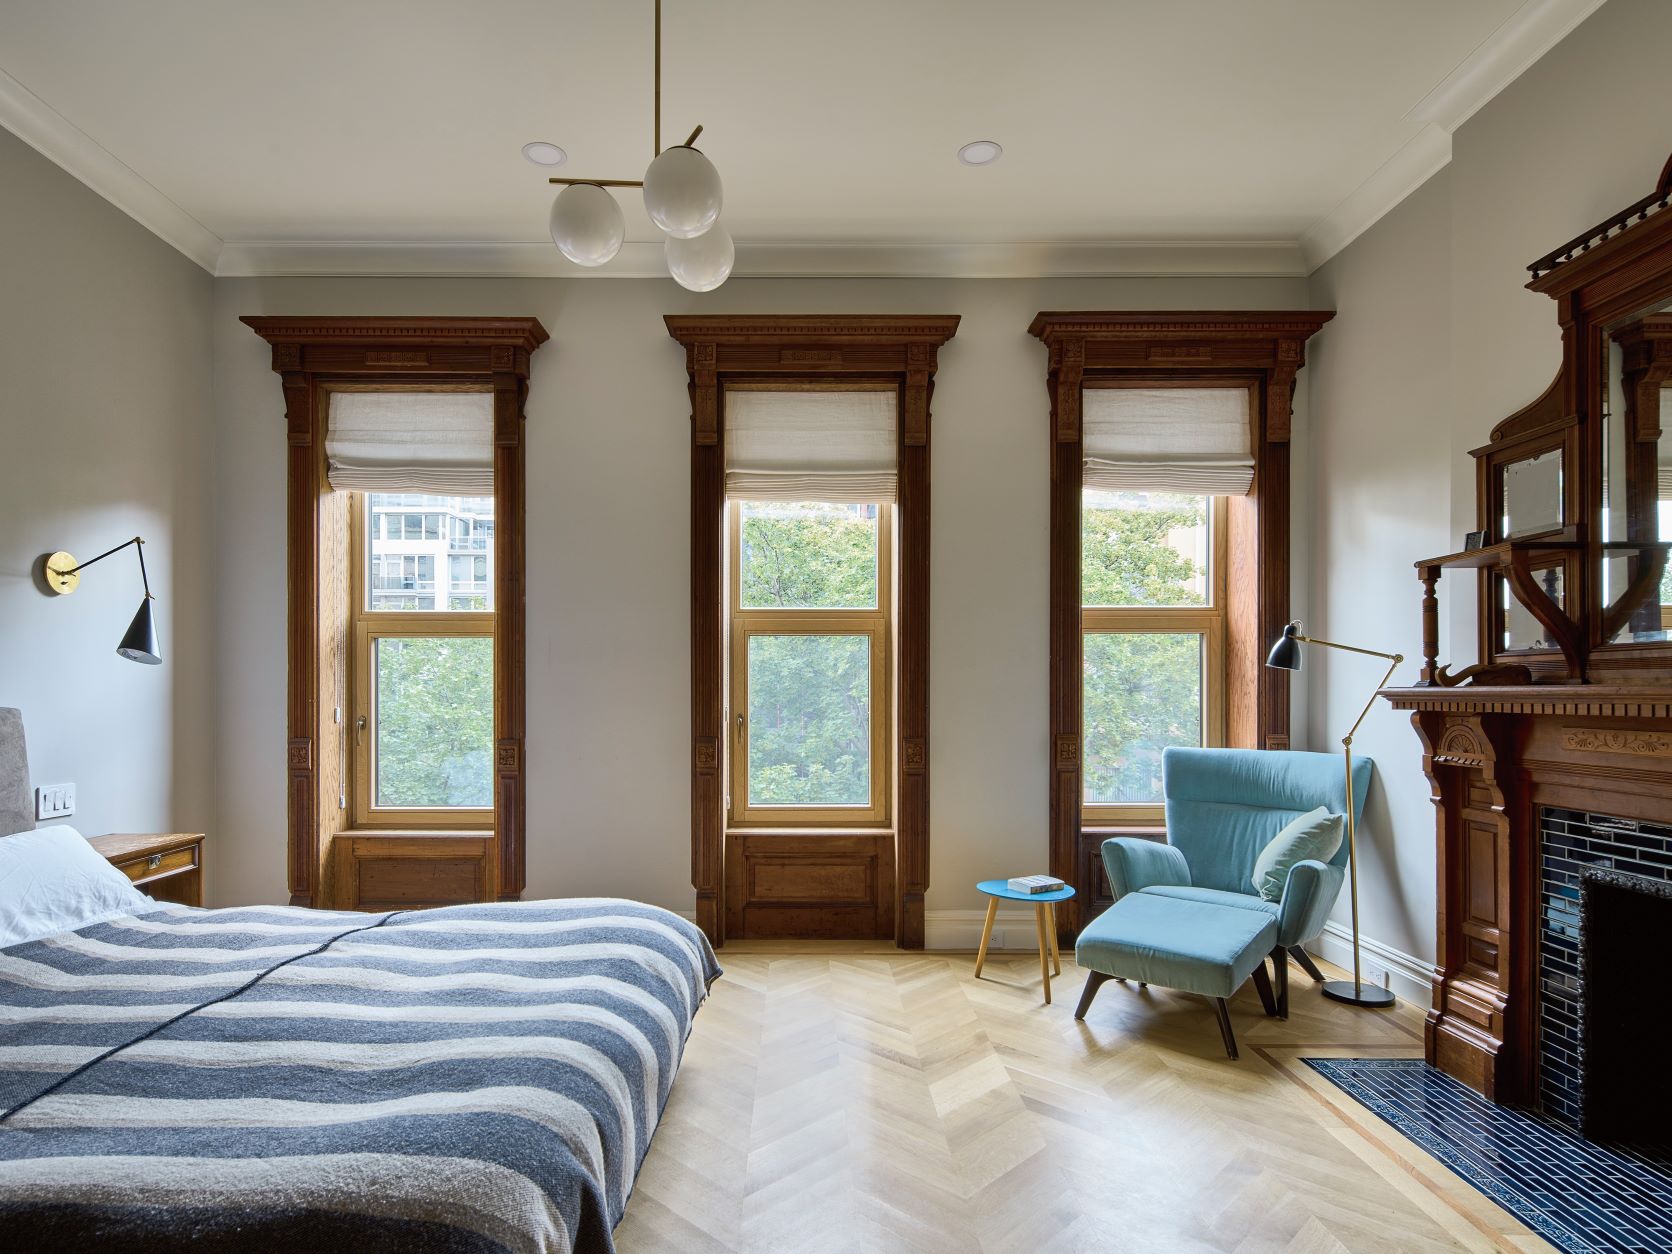 Harlem House 内部重温古典结构，但室内软装色调上多采浅色系，避免过度沦为直观的当代印象。